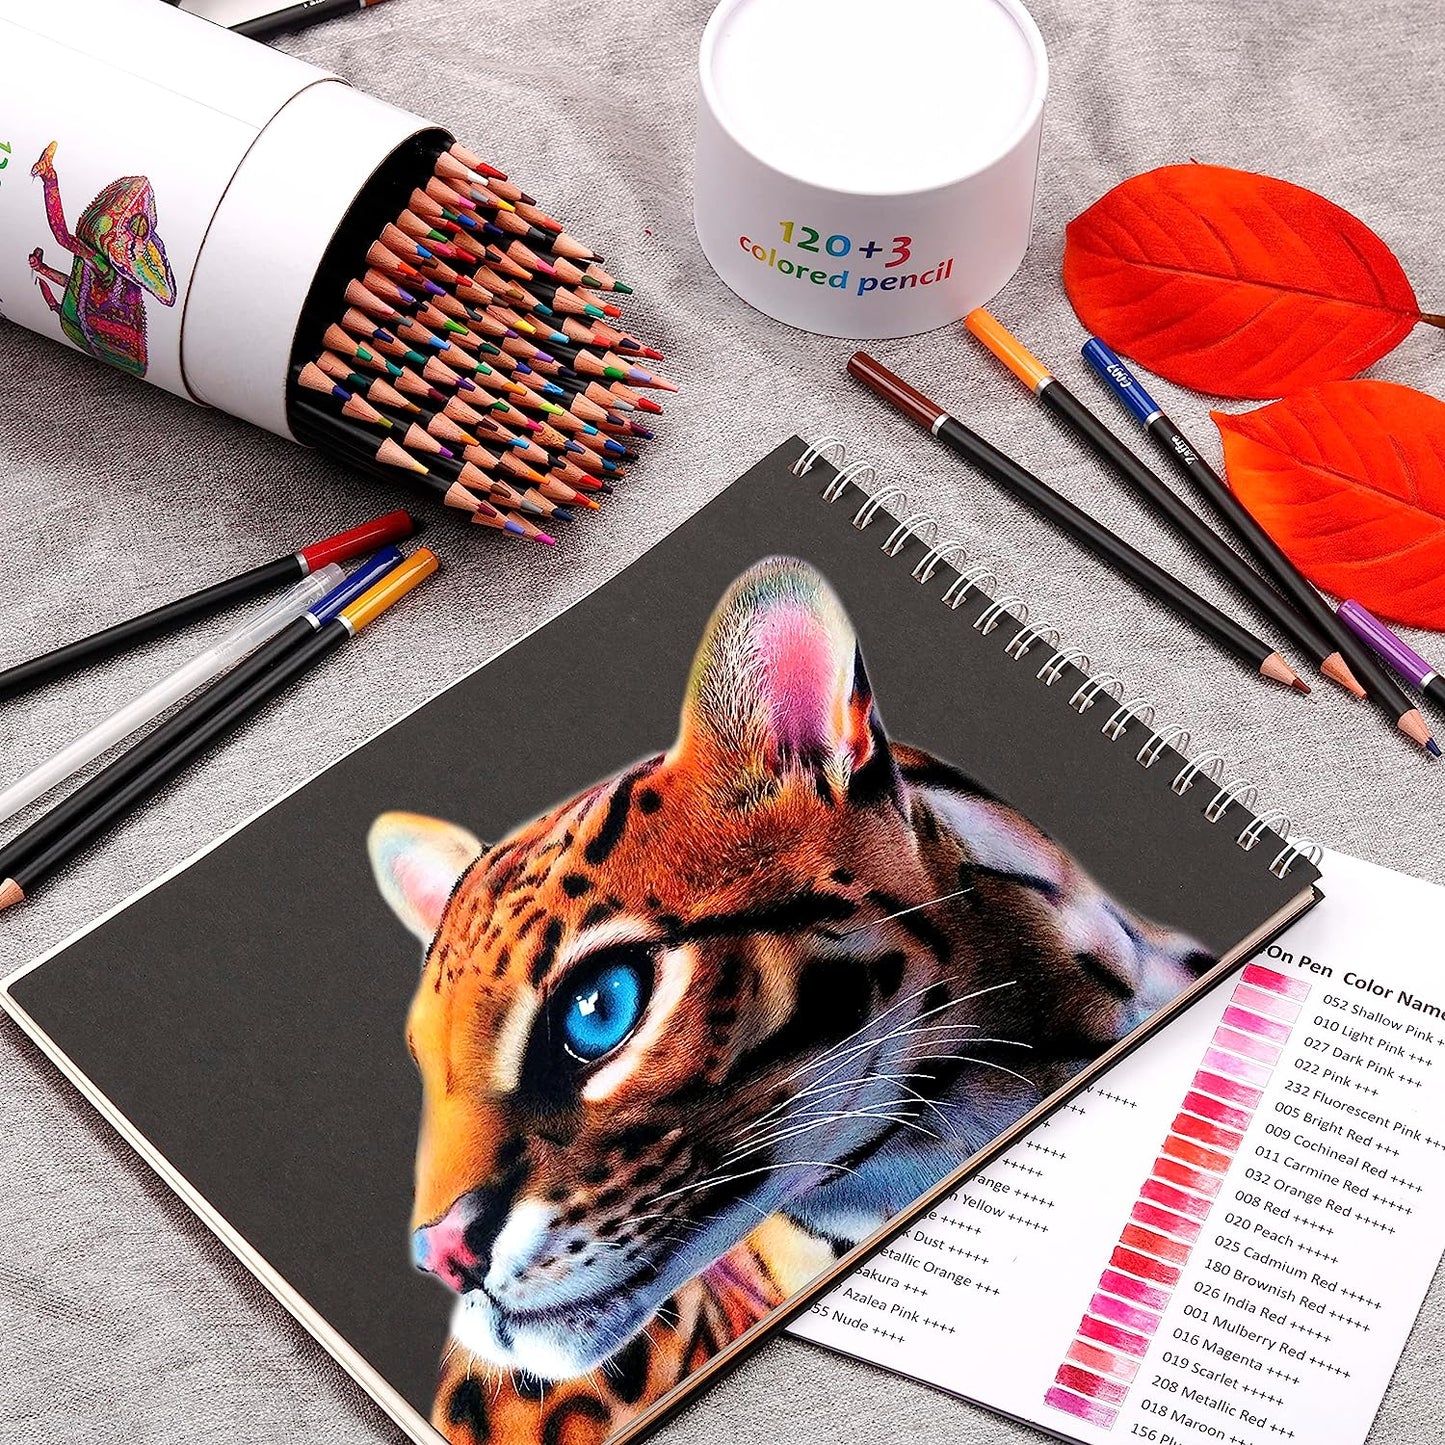 KALOUR Premium Watercolor Pencils, Set of 120 Colors,with Water Brush —  CHIMIYA